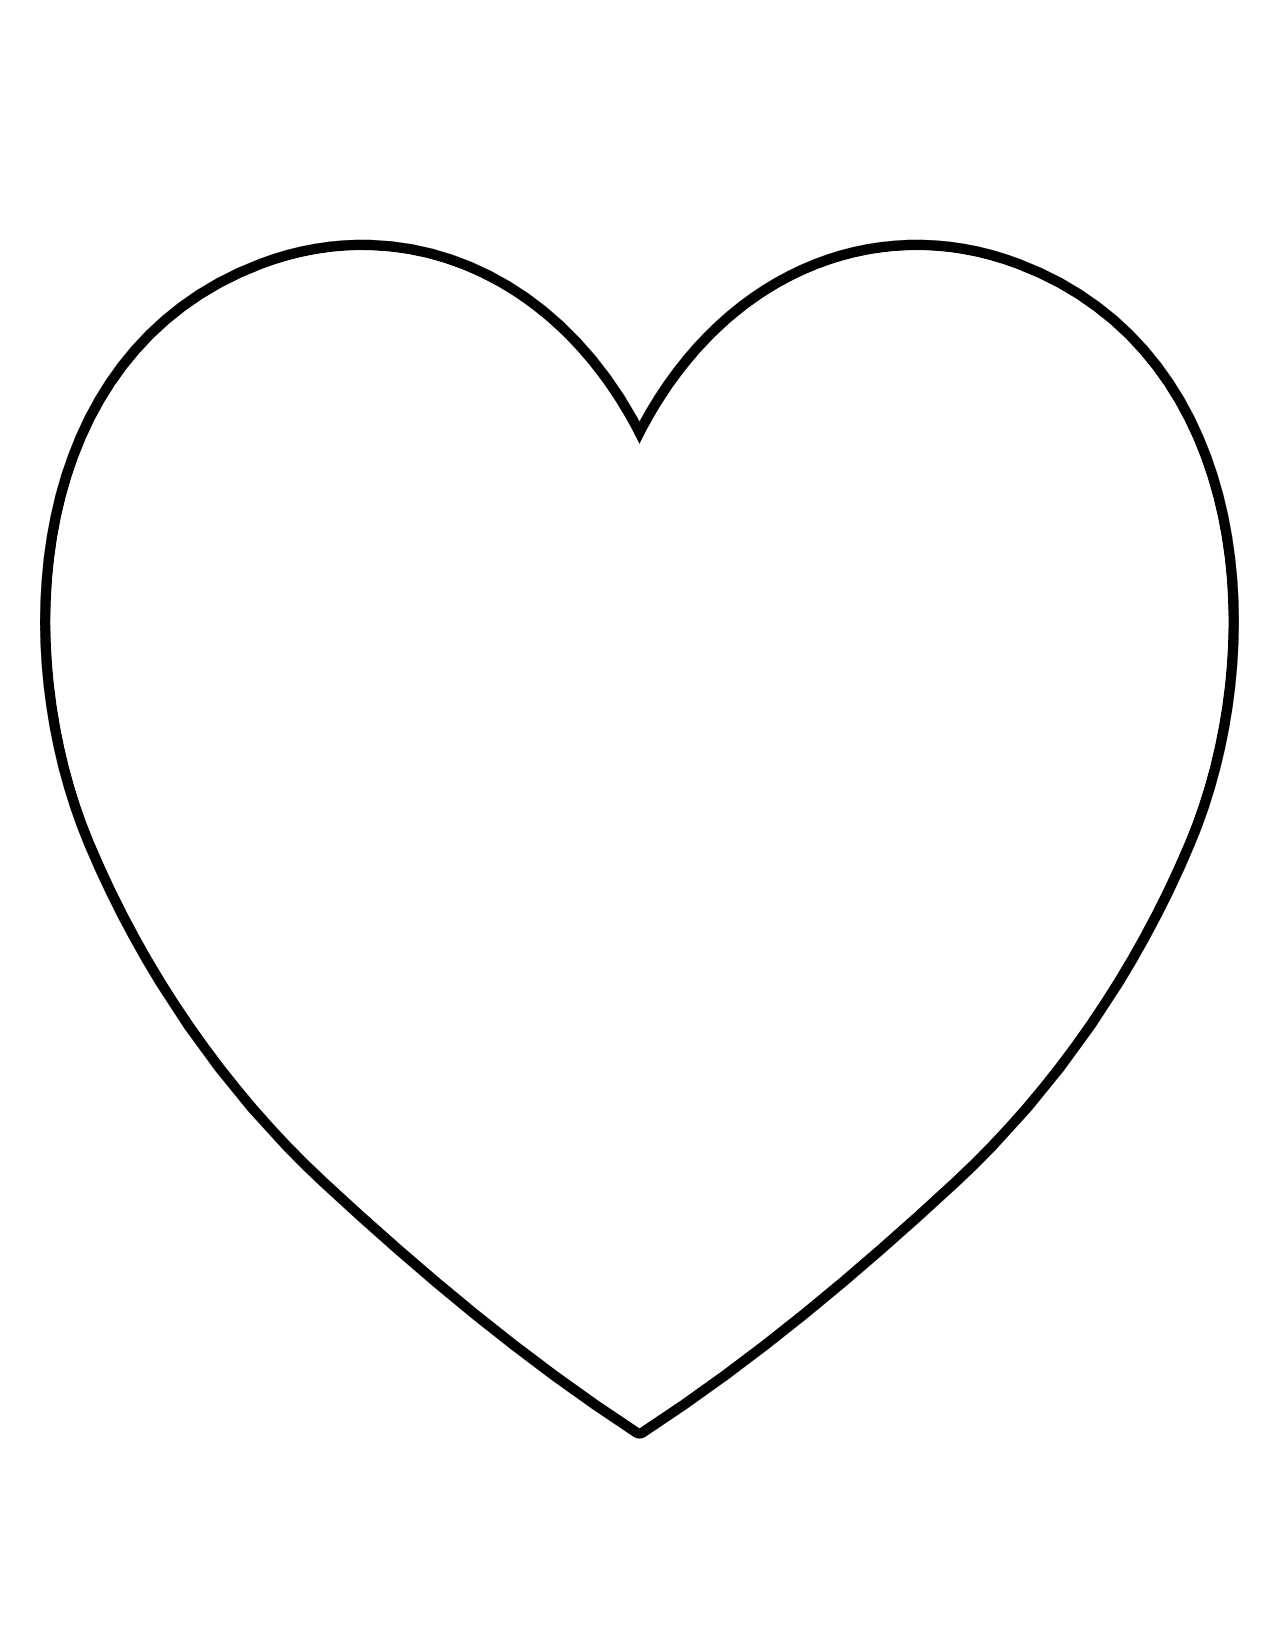 12-free-printable-heart-template-cut-outs-laptrinhx-news-heart